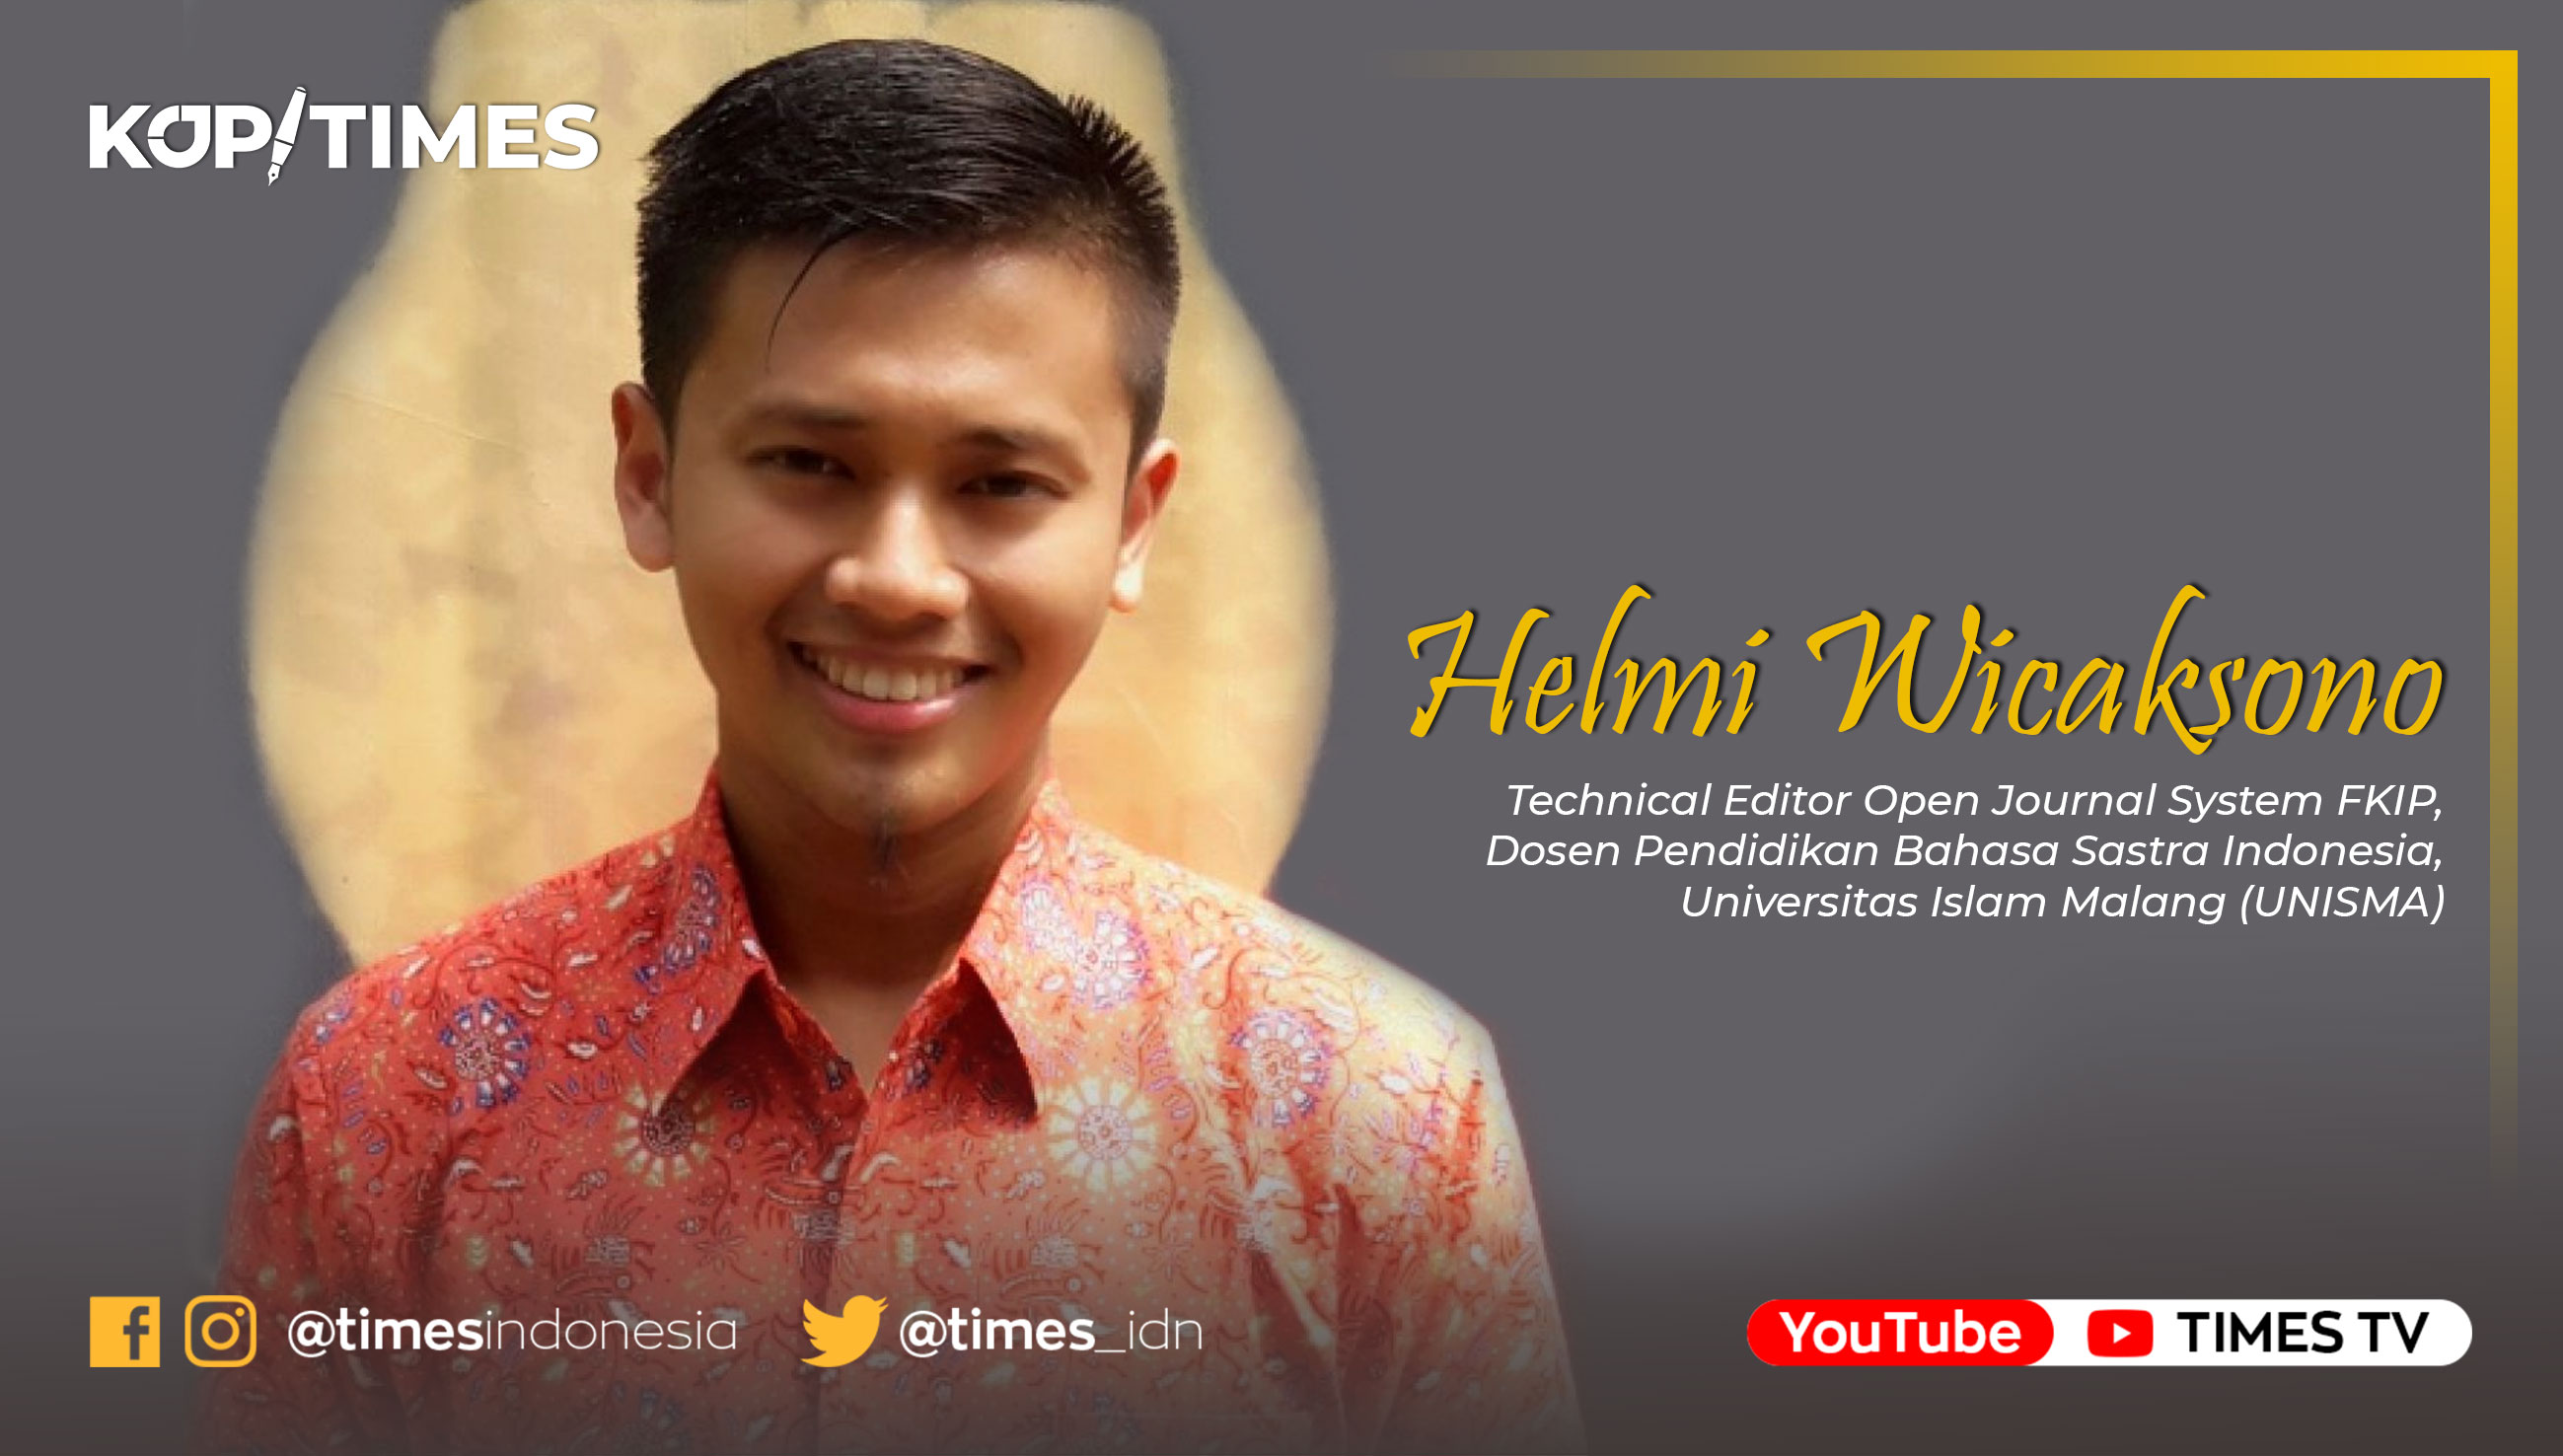 Helmi Wicaksono, Technical Editor Open Journal System FKIP, Dosen Pendidikan Bahasa Sastra Indonesia (PBSI) Universitas Islam Malang (UNISMA).